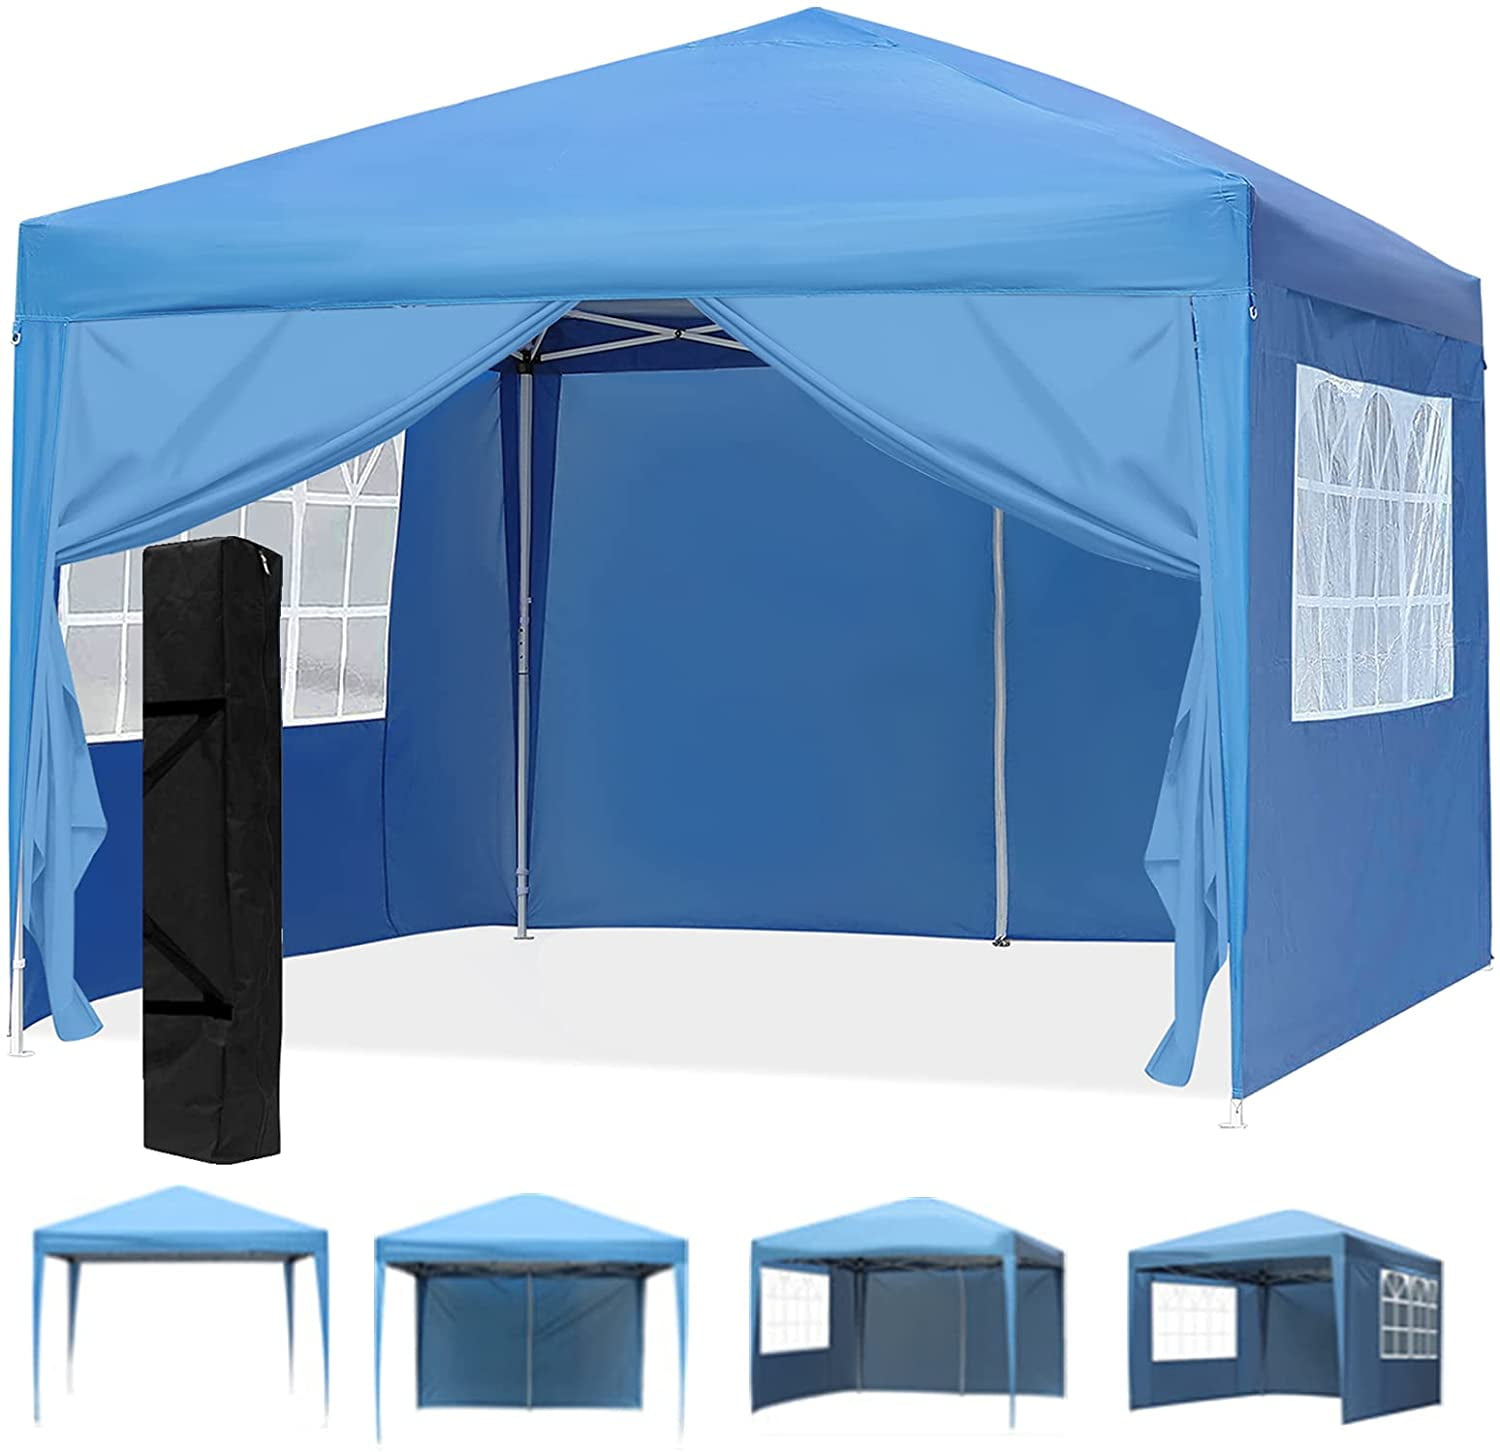 10x10 EZ Pop Up Canopy Tent Outdoor Slant Leg Wedding Party Gazebo with Sidewall 